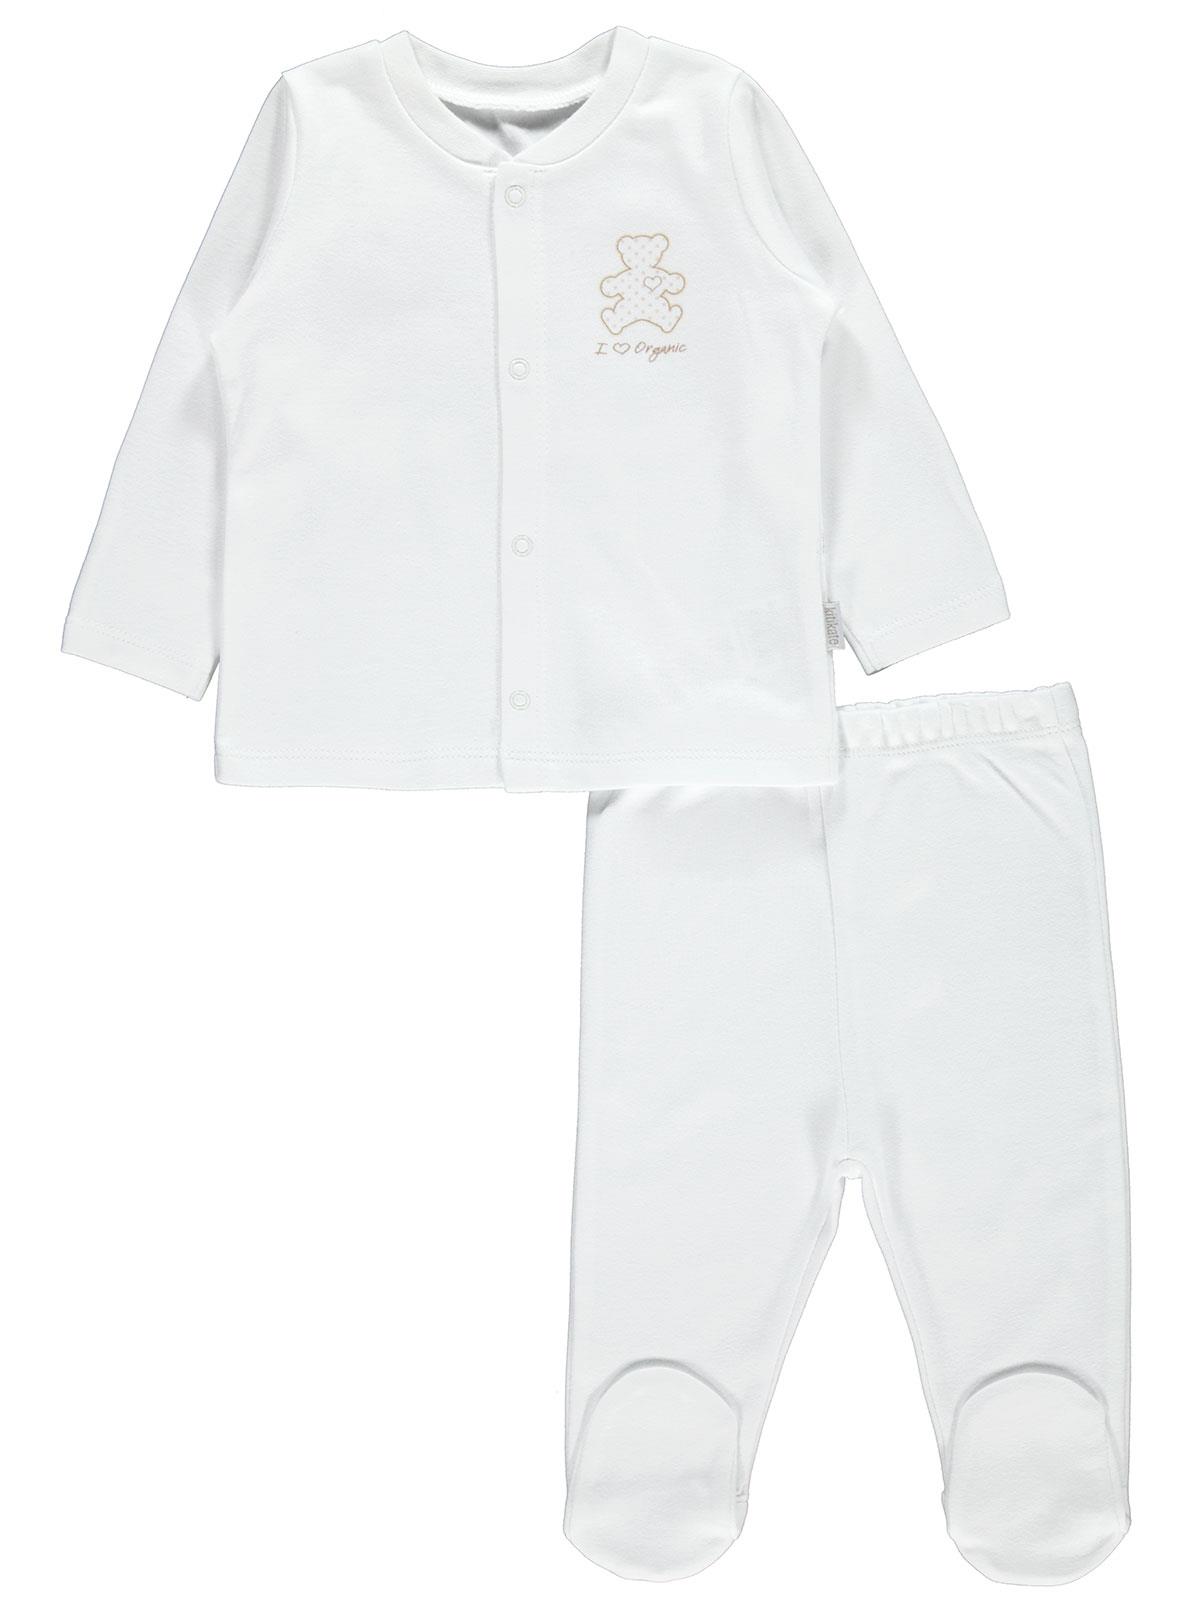 Baby Center Organik Penye Pijama Takımı 0-6 Ay Beyaz